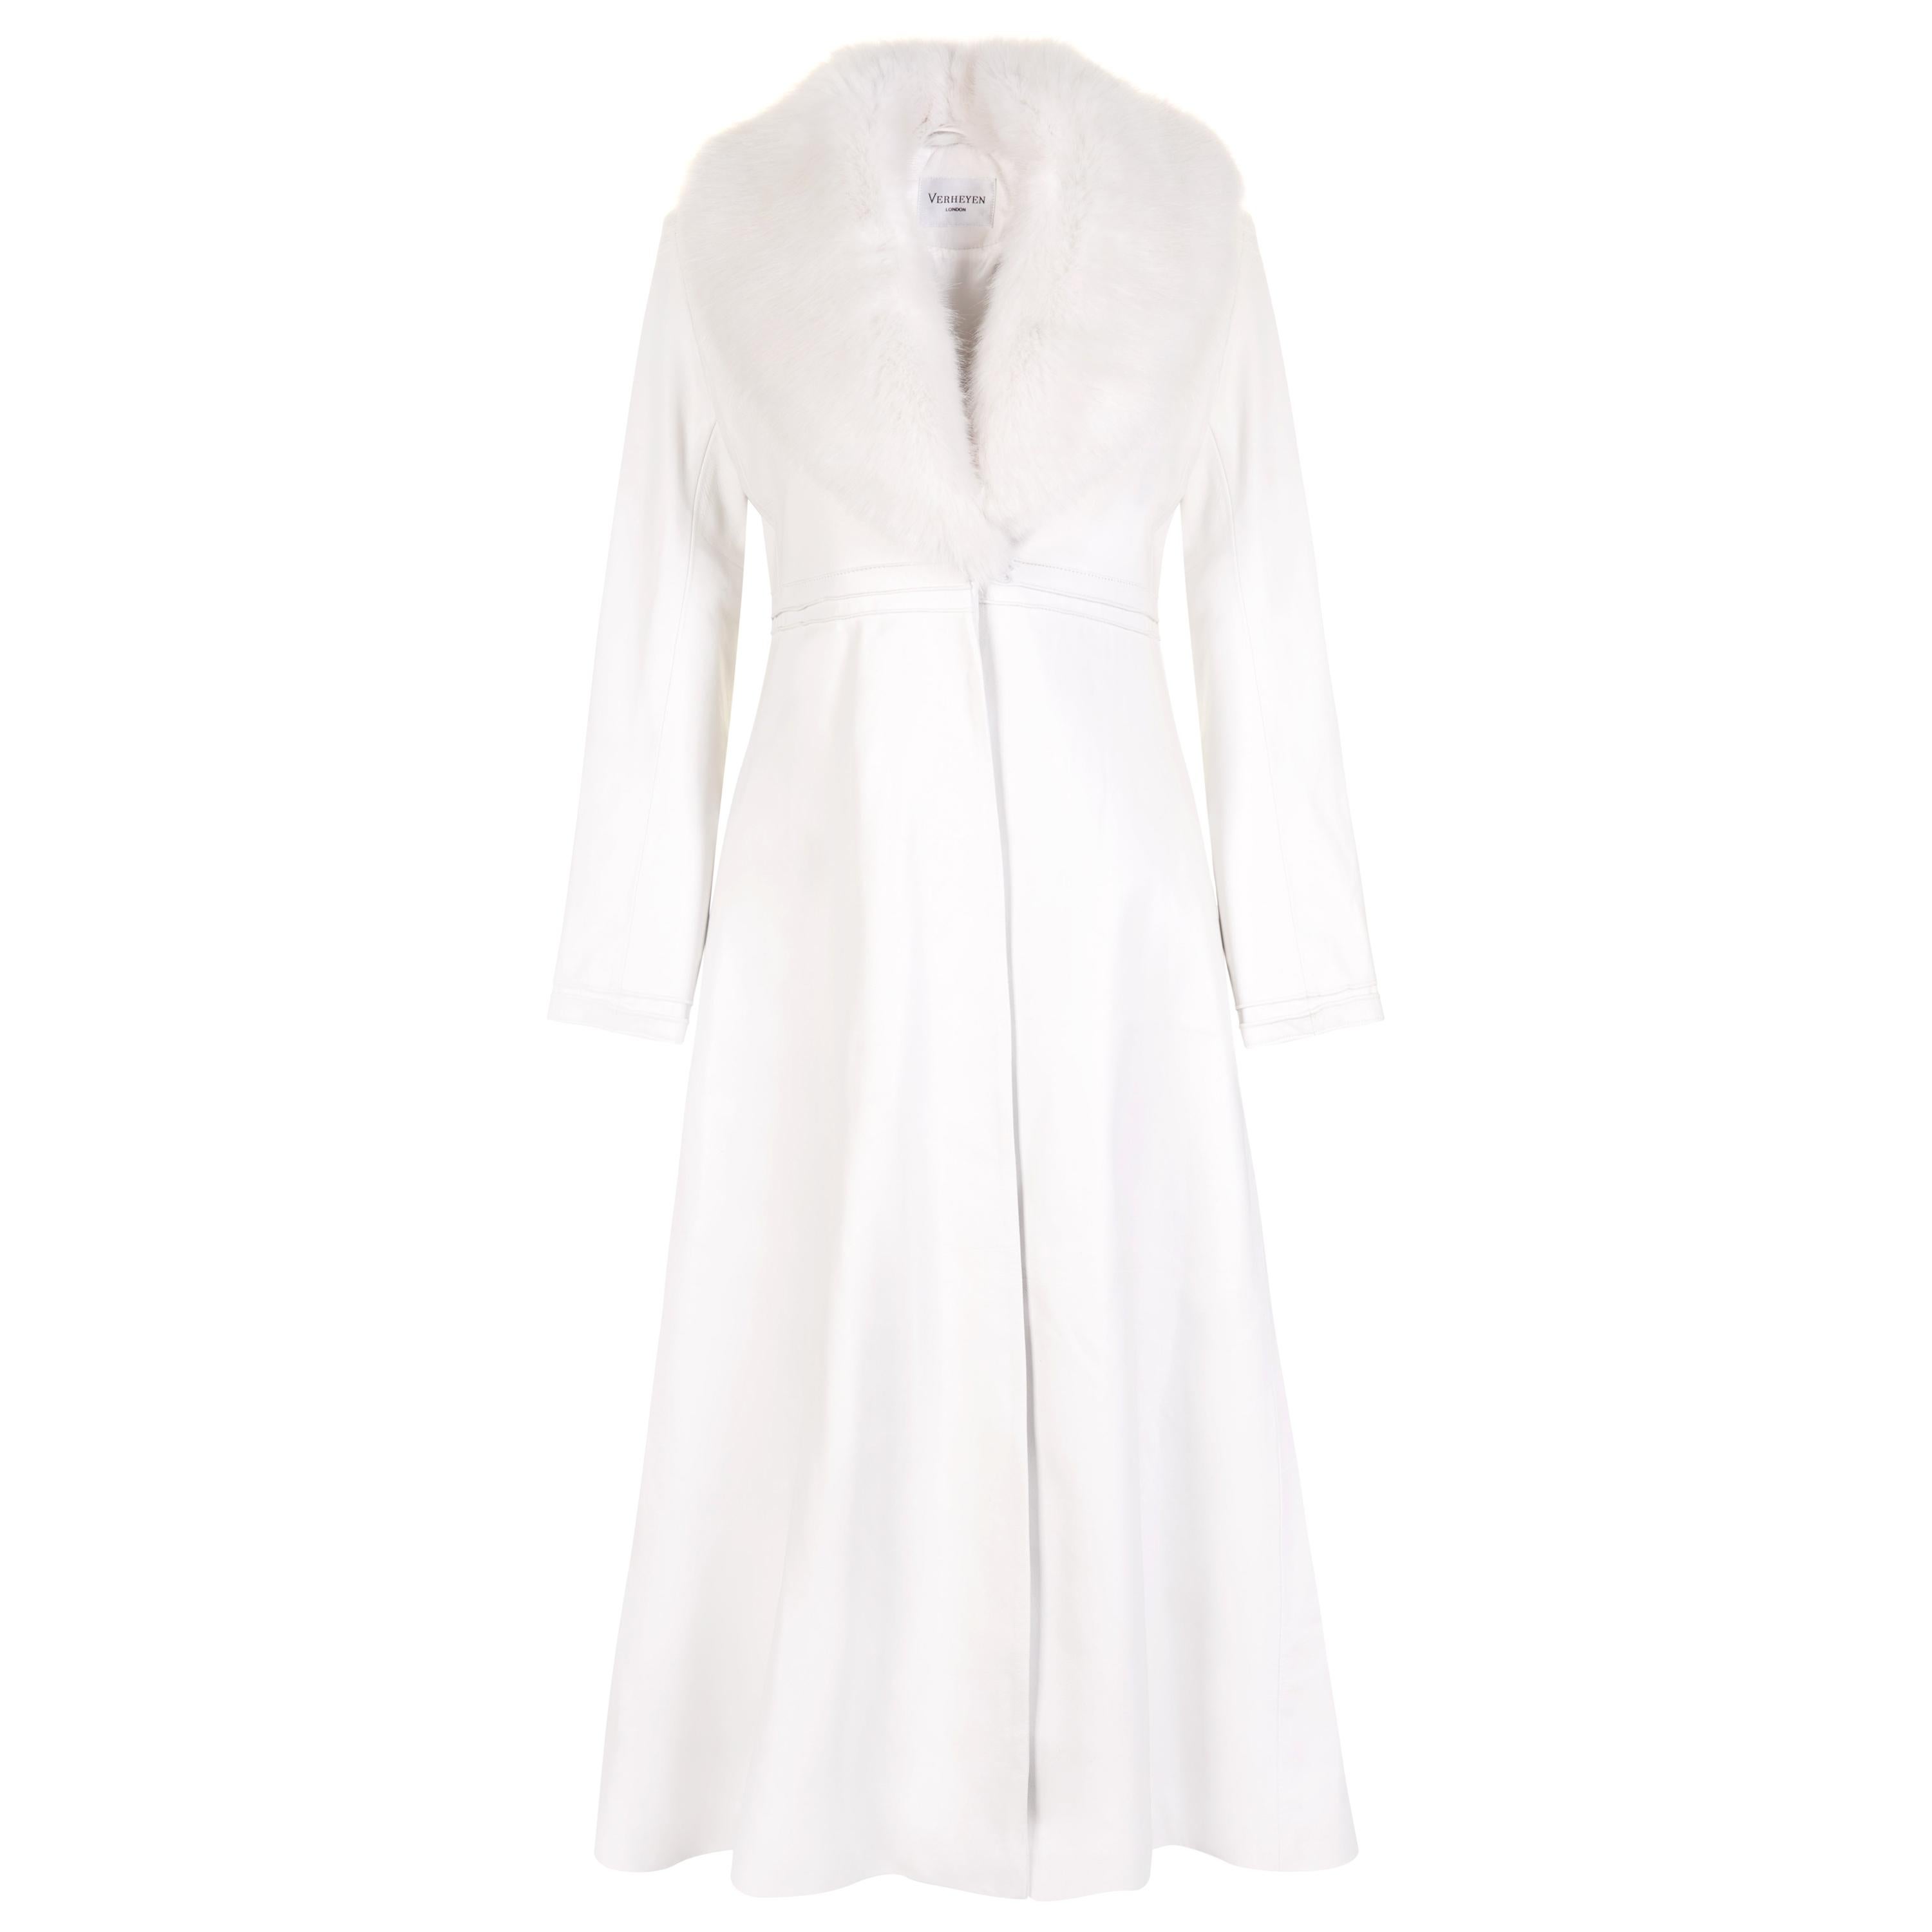 Verheyen London Edward Leather Coat in White with Faux Fur - Size uk 6 